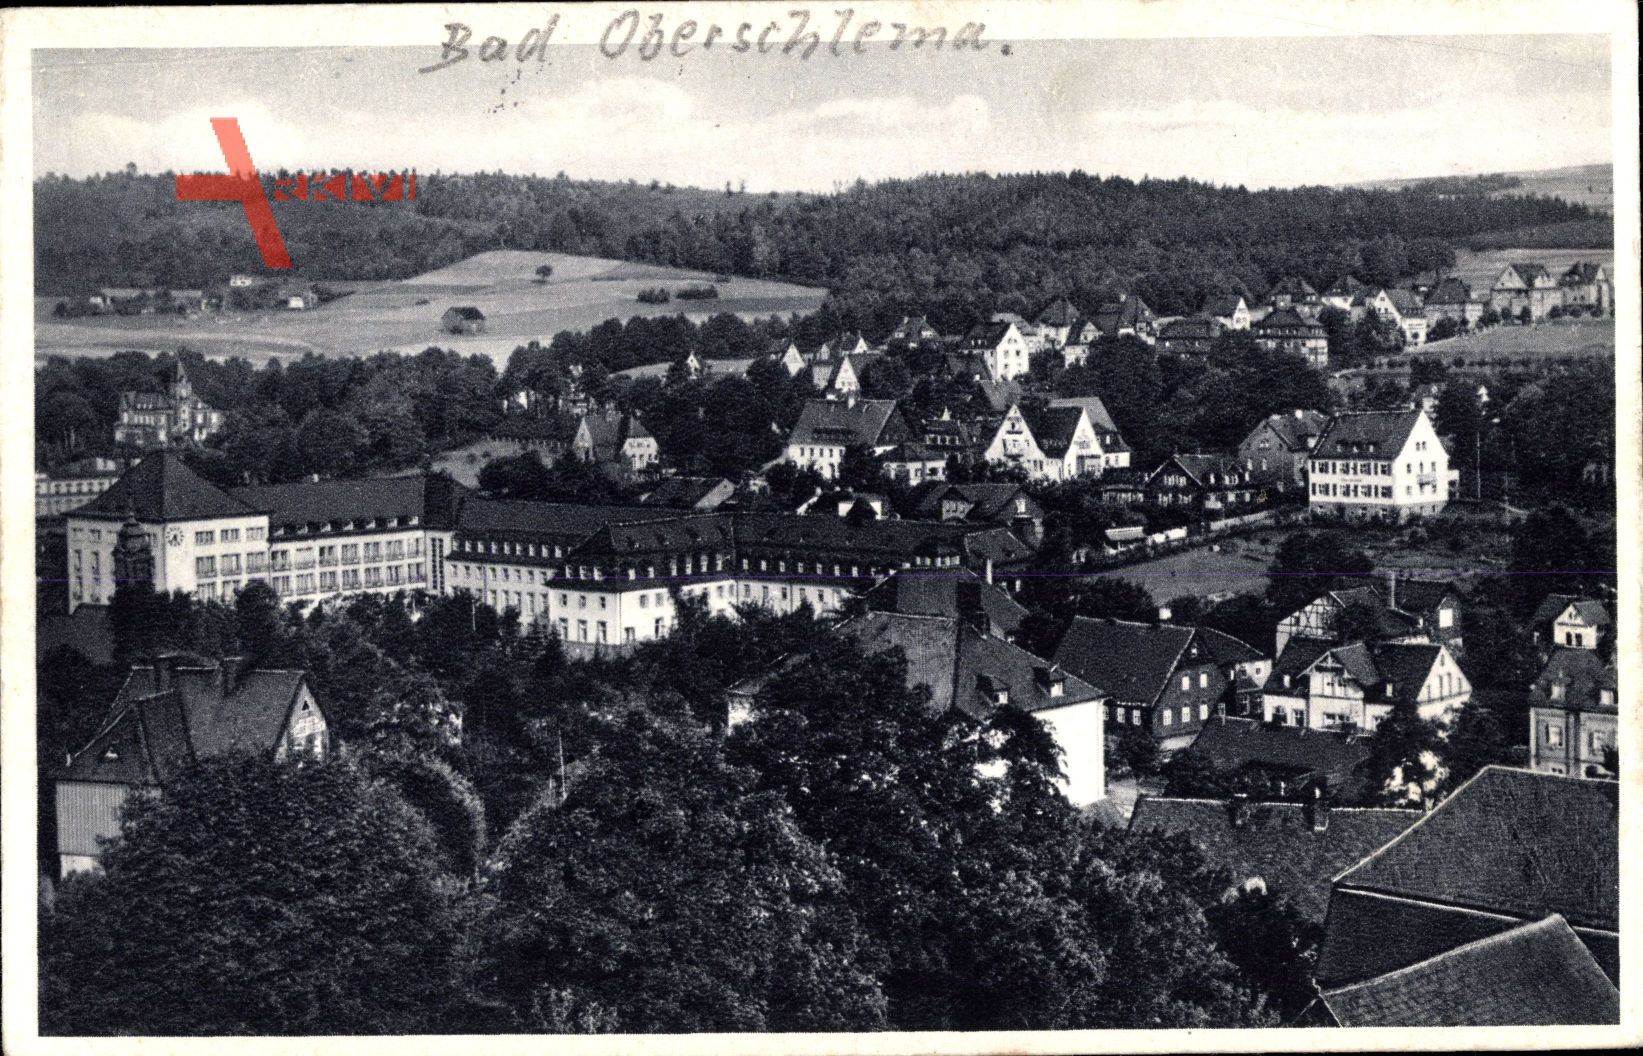 Bad Oberschlema Erzgebirge, Blick auf den Ort, Wald, Felder, Radiumbad